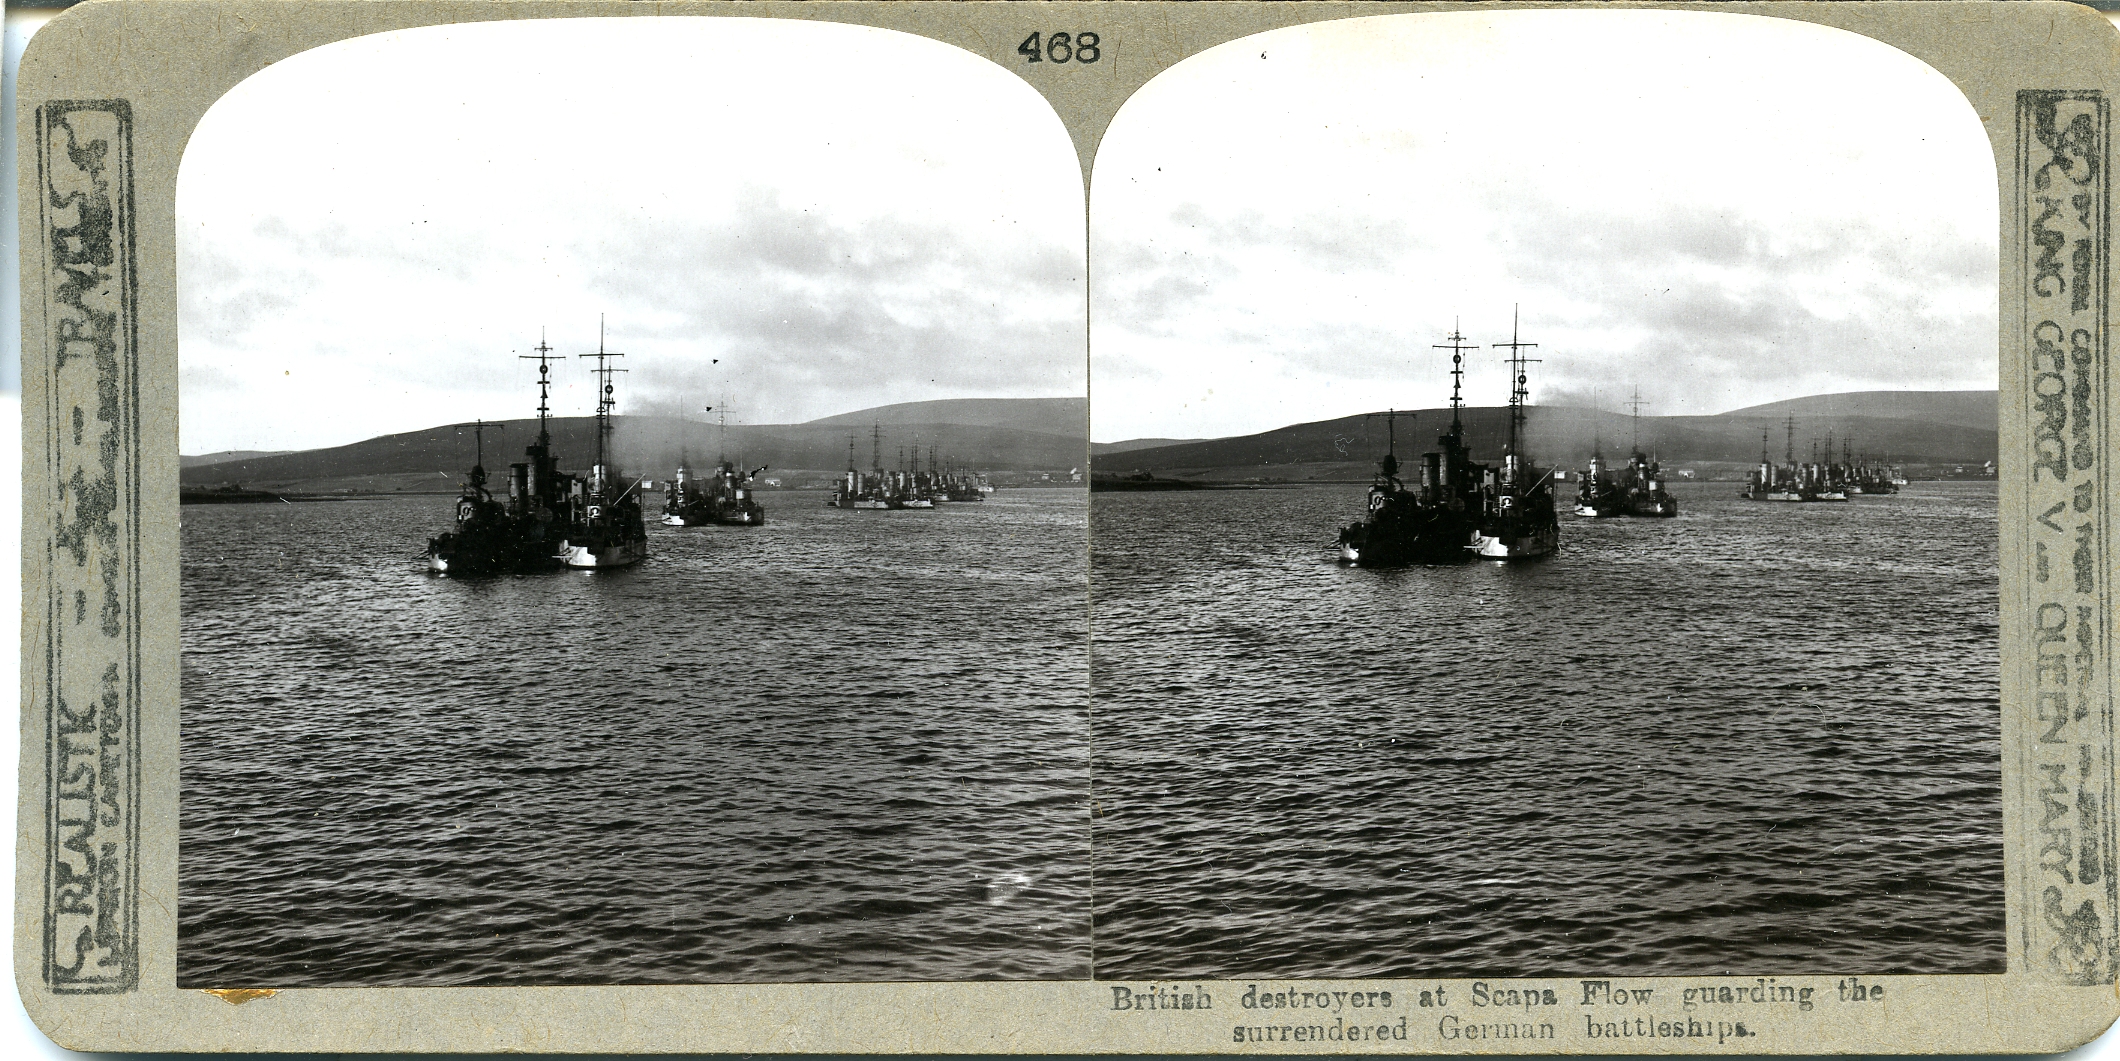 British destroyers at Scapa Flow guarding the surrendered German battleships